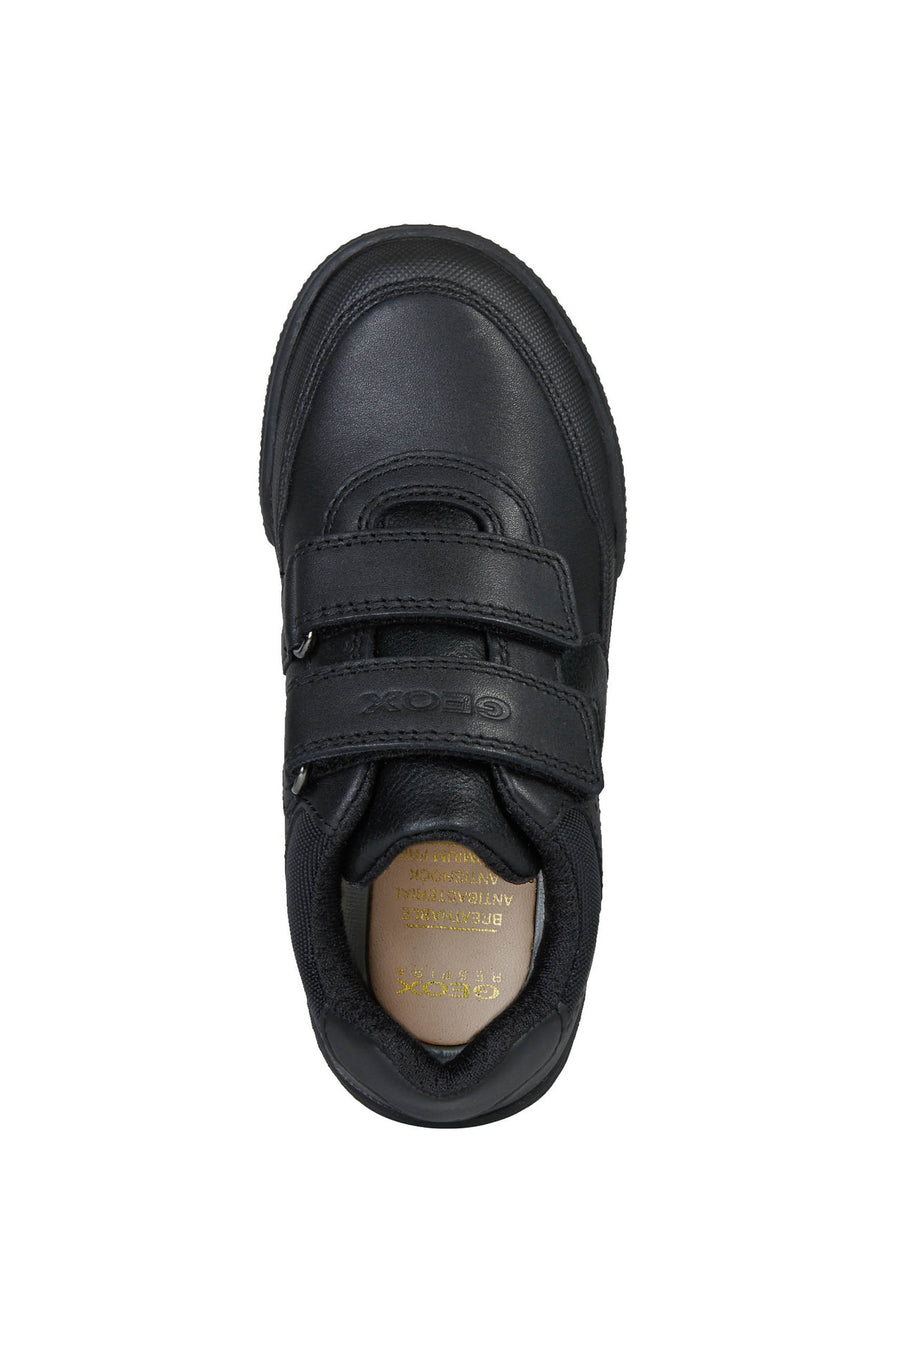 Geox Poseido | Velcro School Shoes |Black